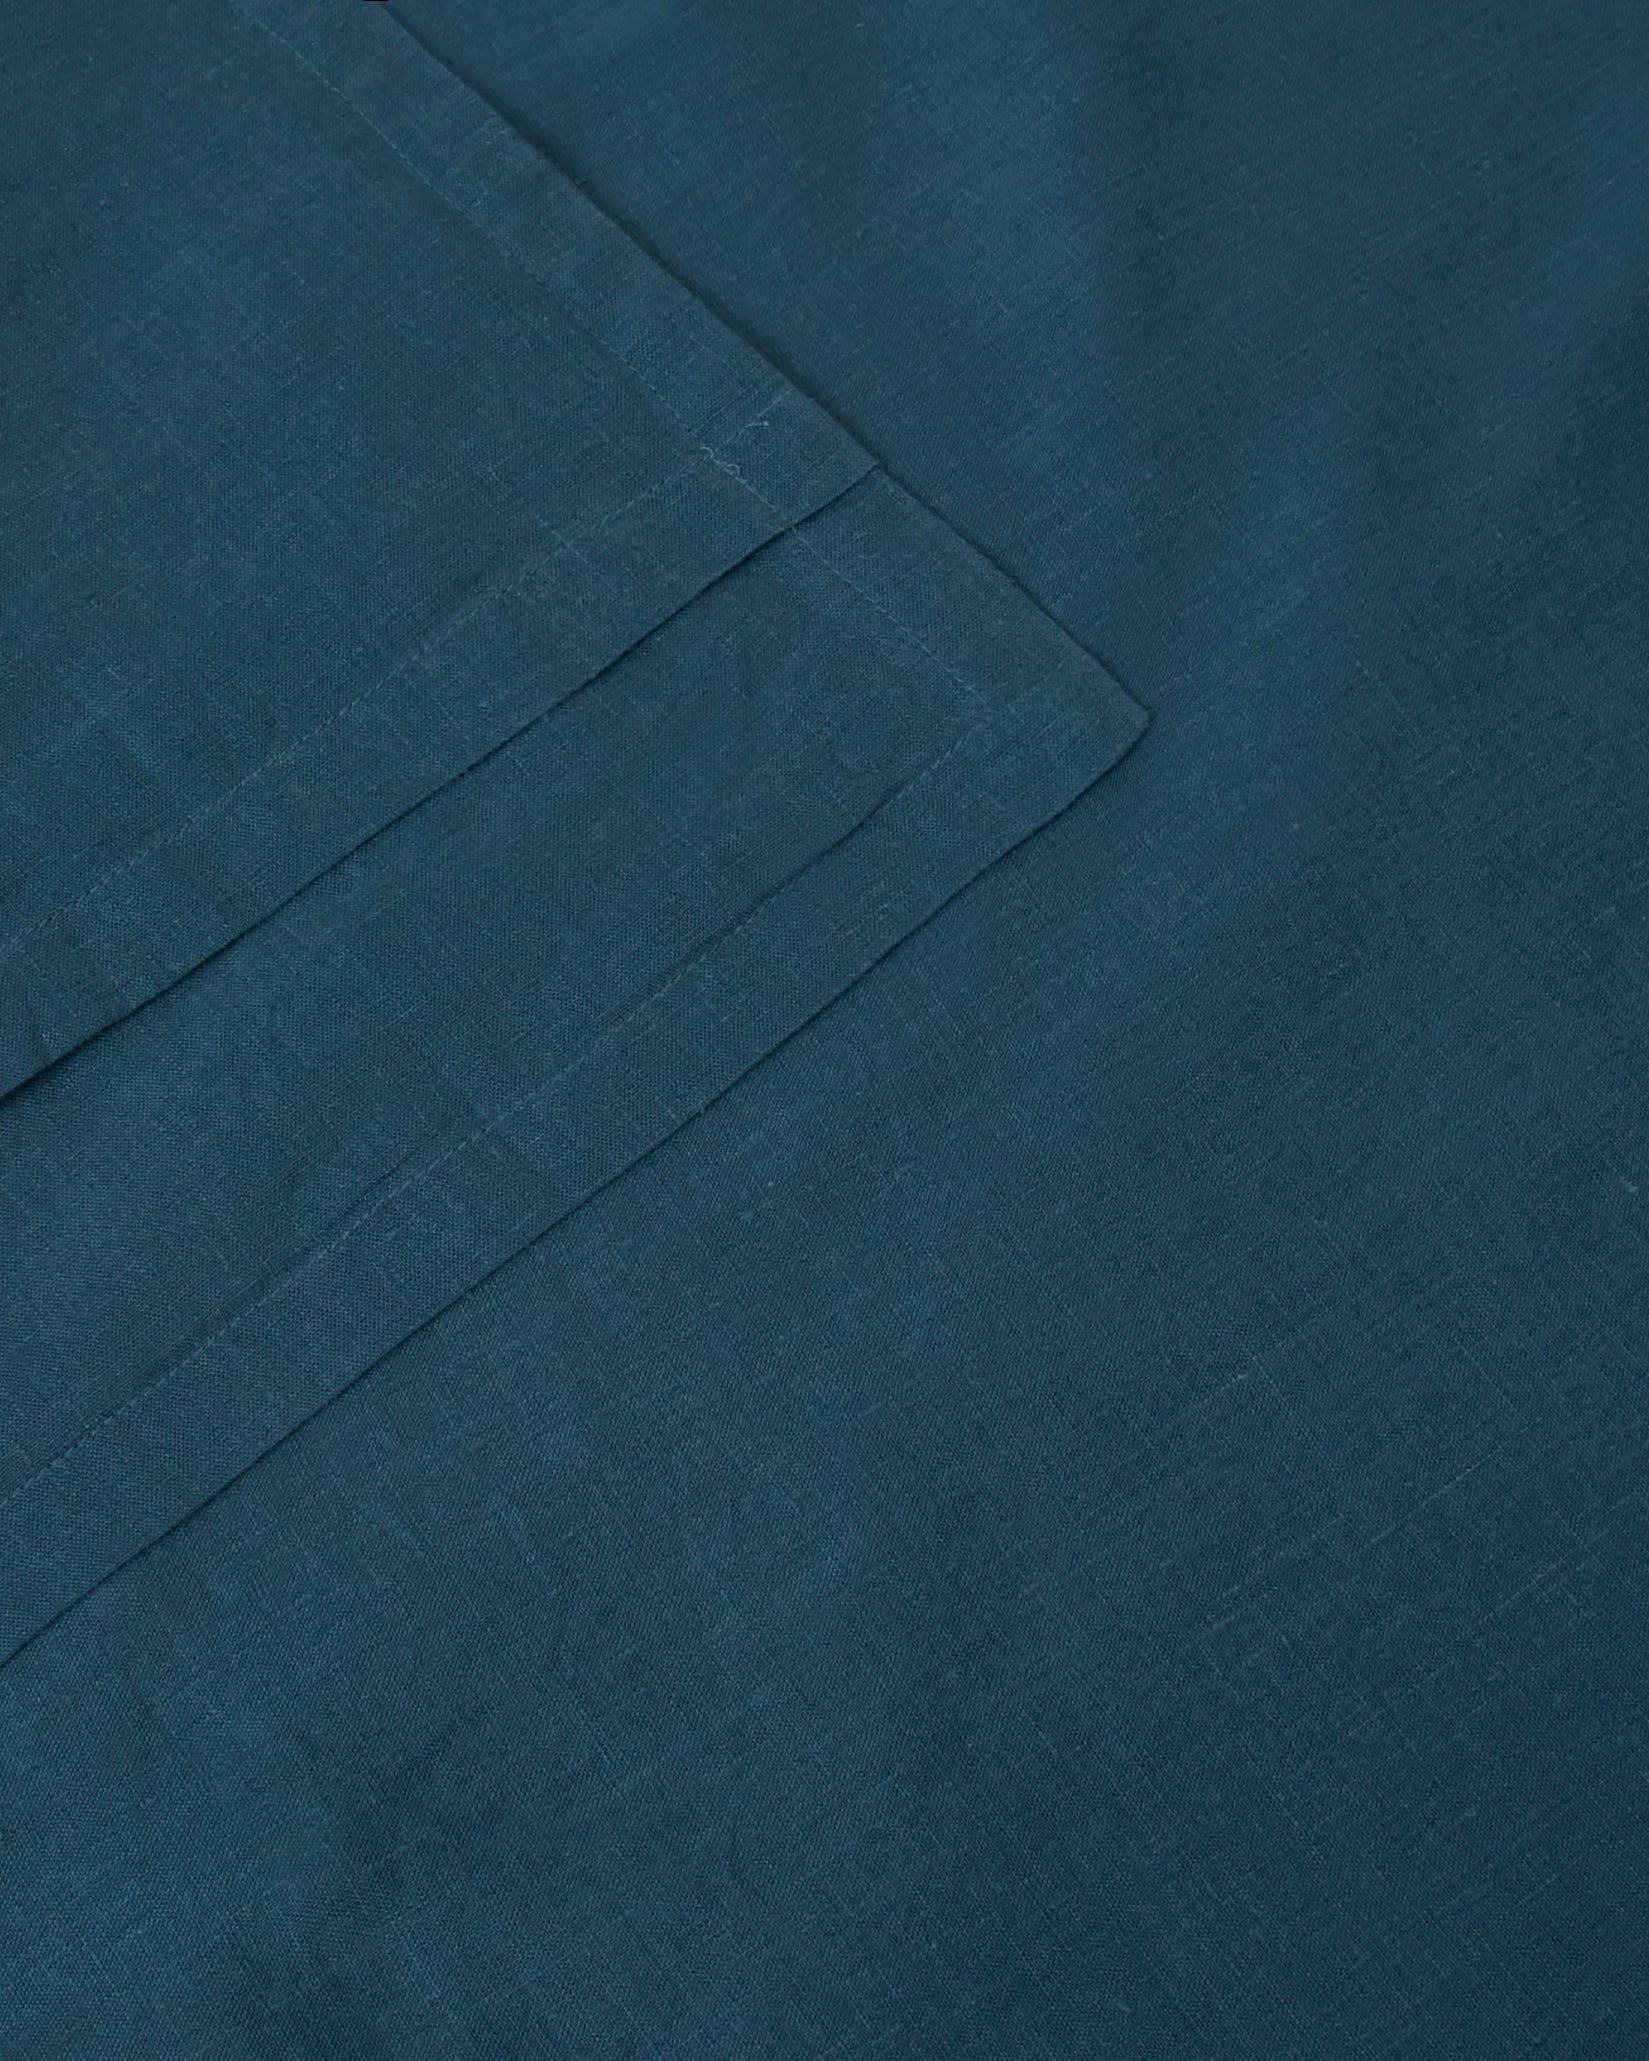 Pair of filled pillowcases in dark blue adriatic